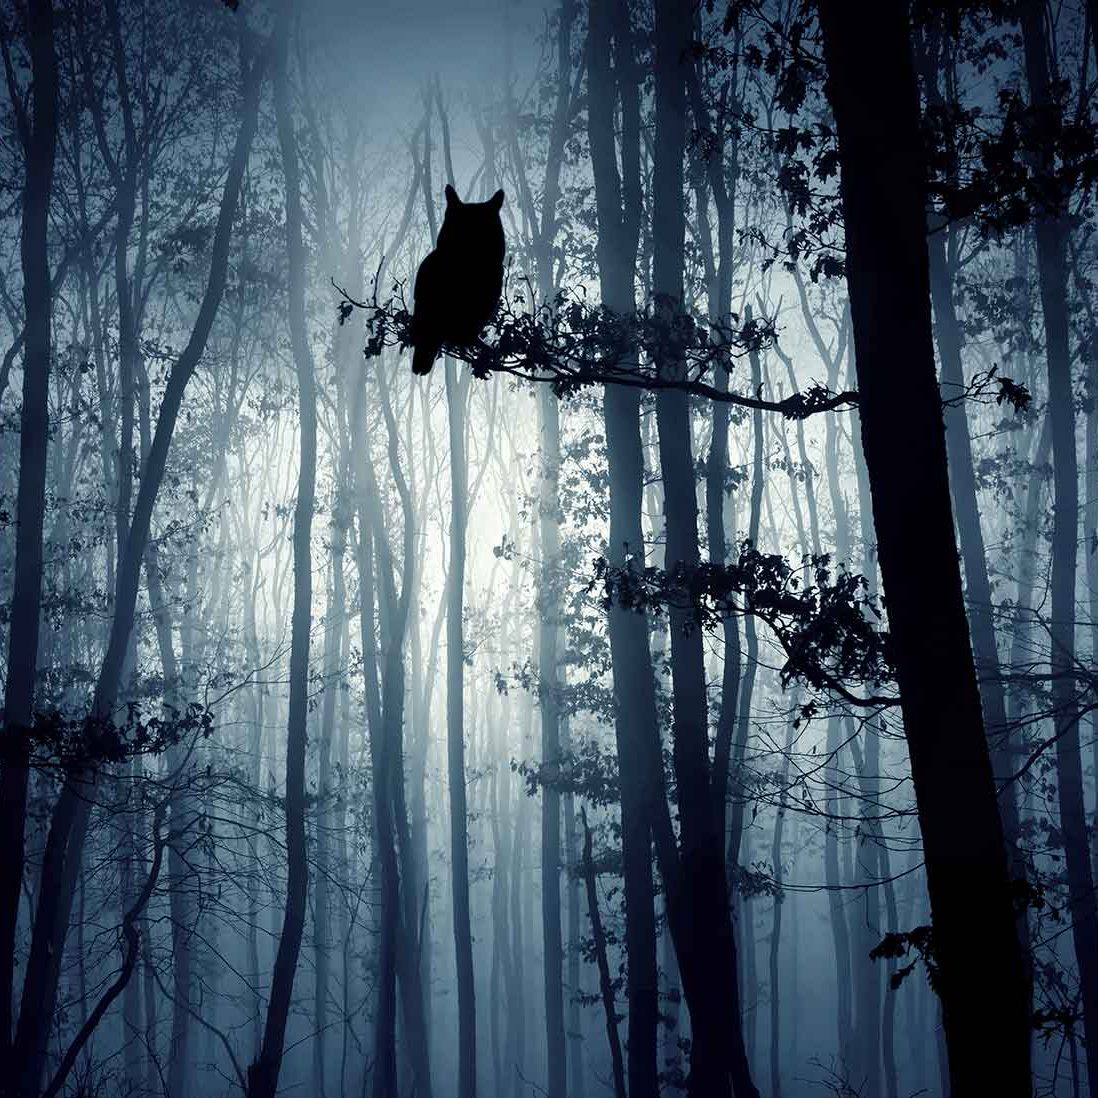 En skog om natten med en uggla som sitter på en gren.